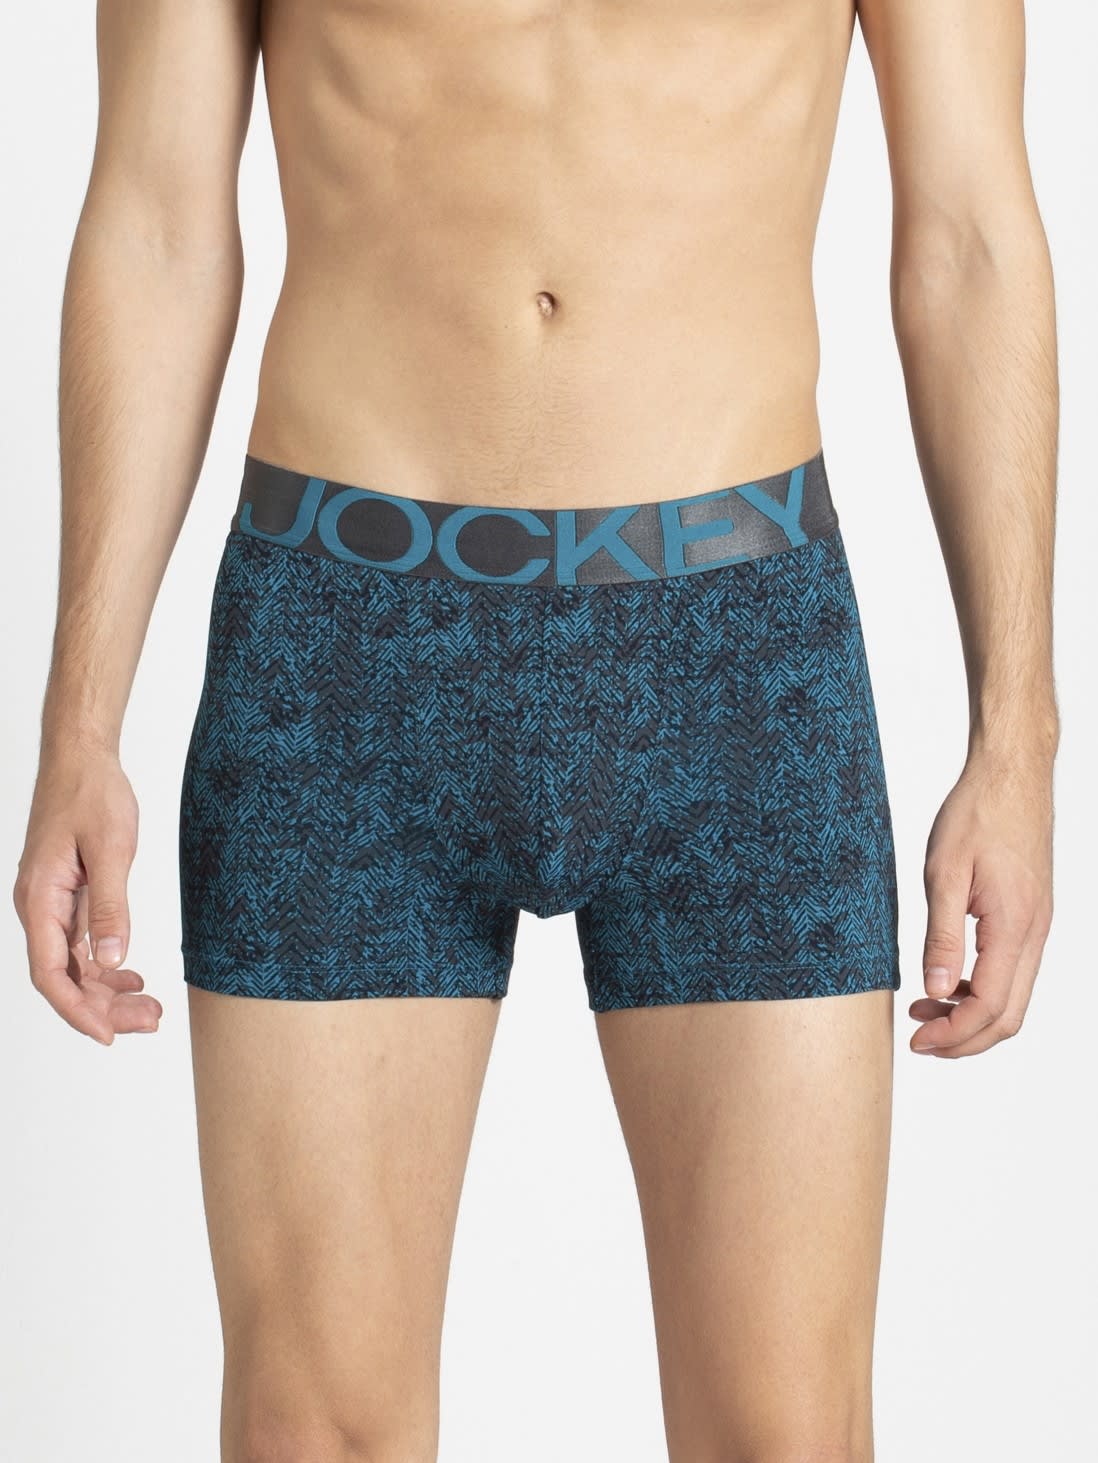 Buy Men Trunks Underwear IC30 Ocean Depth Prints |Jockey India